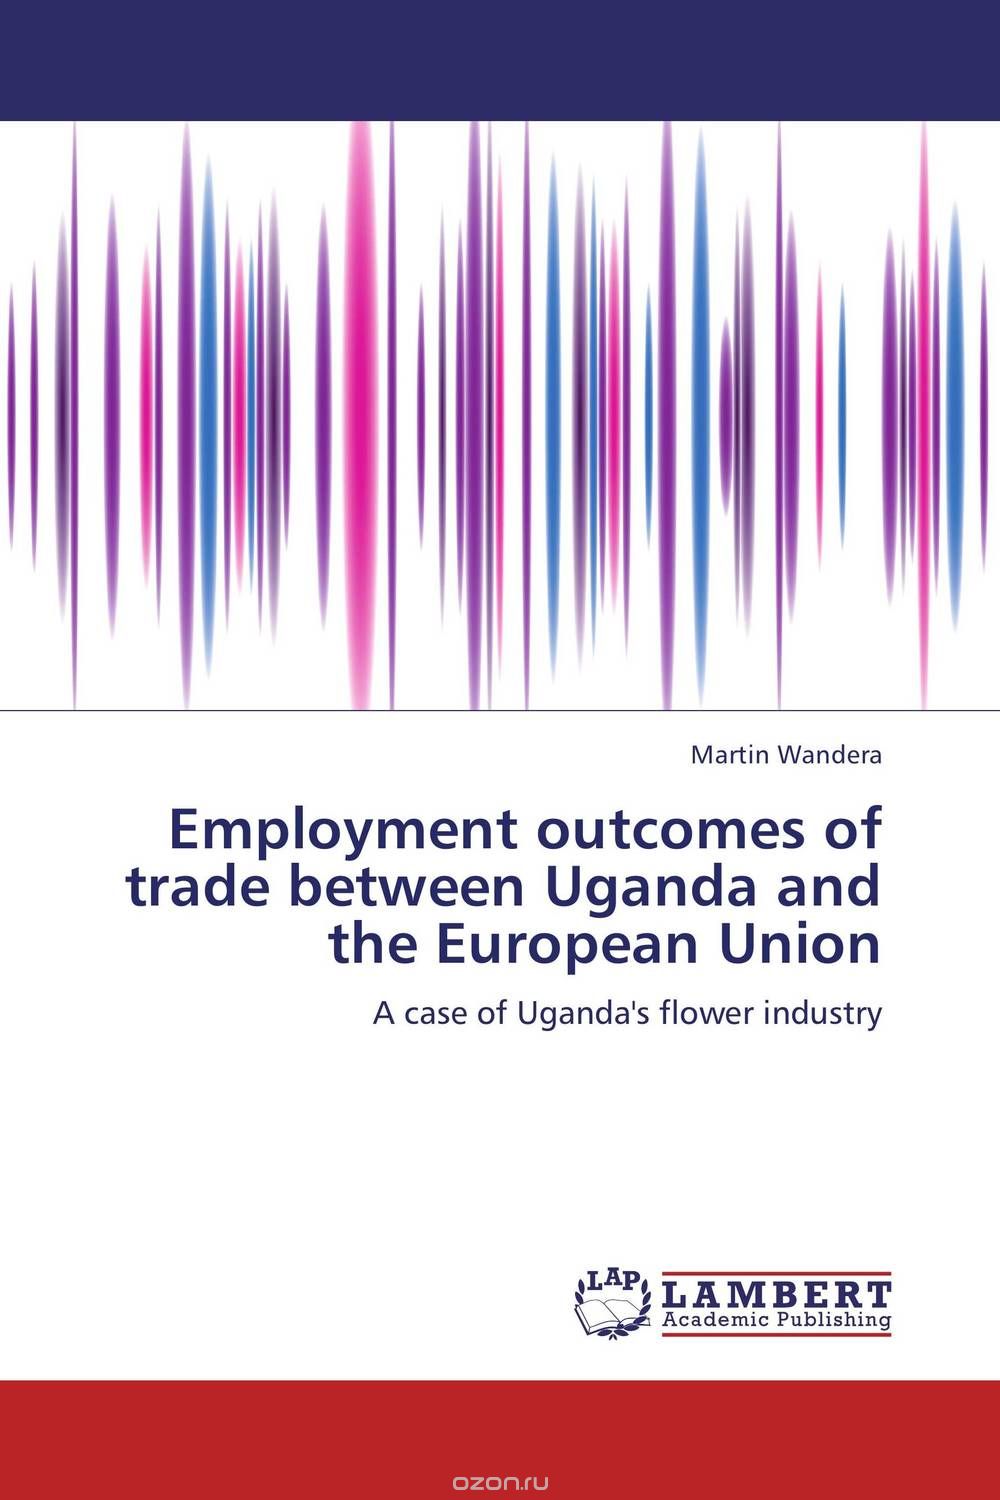 Скачать книгу "Employment outcomes of trade between Uganda and the European Union"